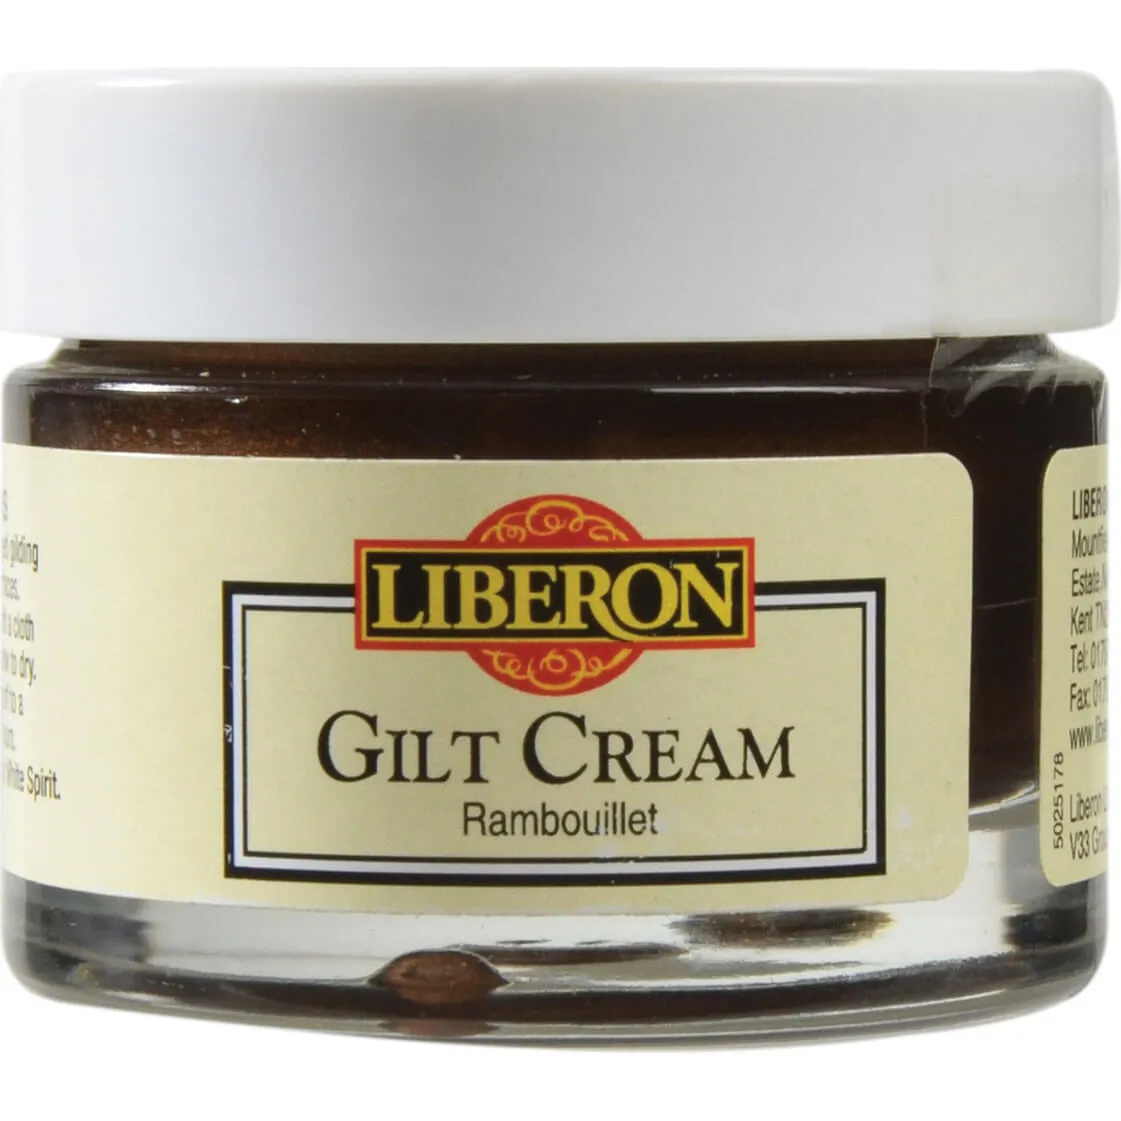 Liberon Gilt Cream - 30ml, Rambouillet